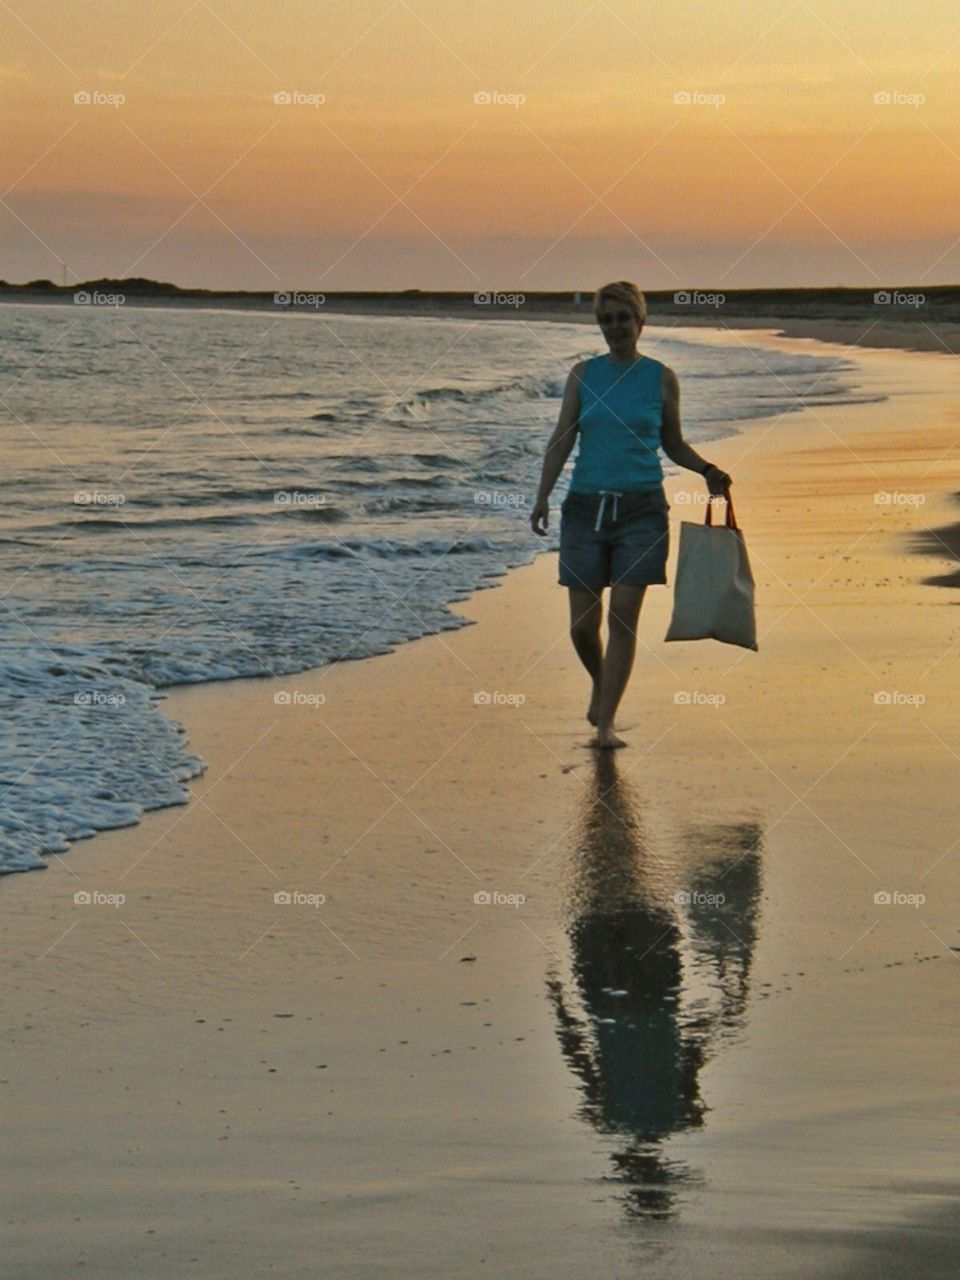 Beachcomber at sunset . A lone beachcomber walks the beach at sunset